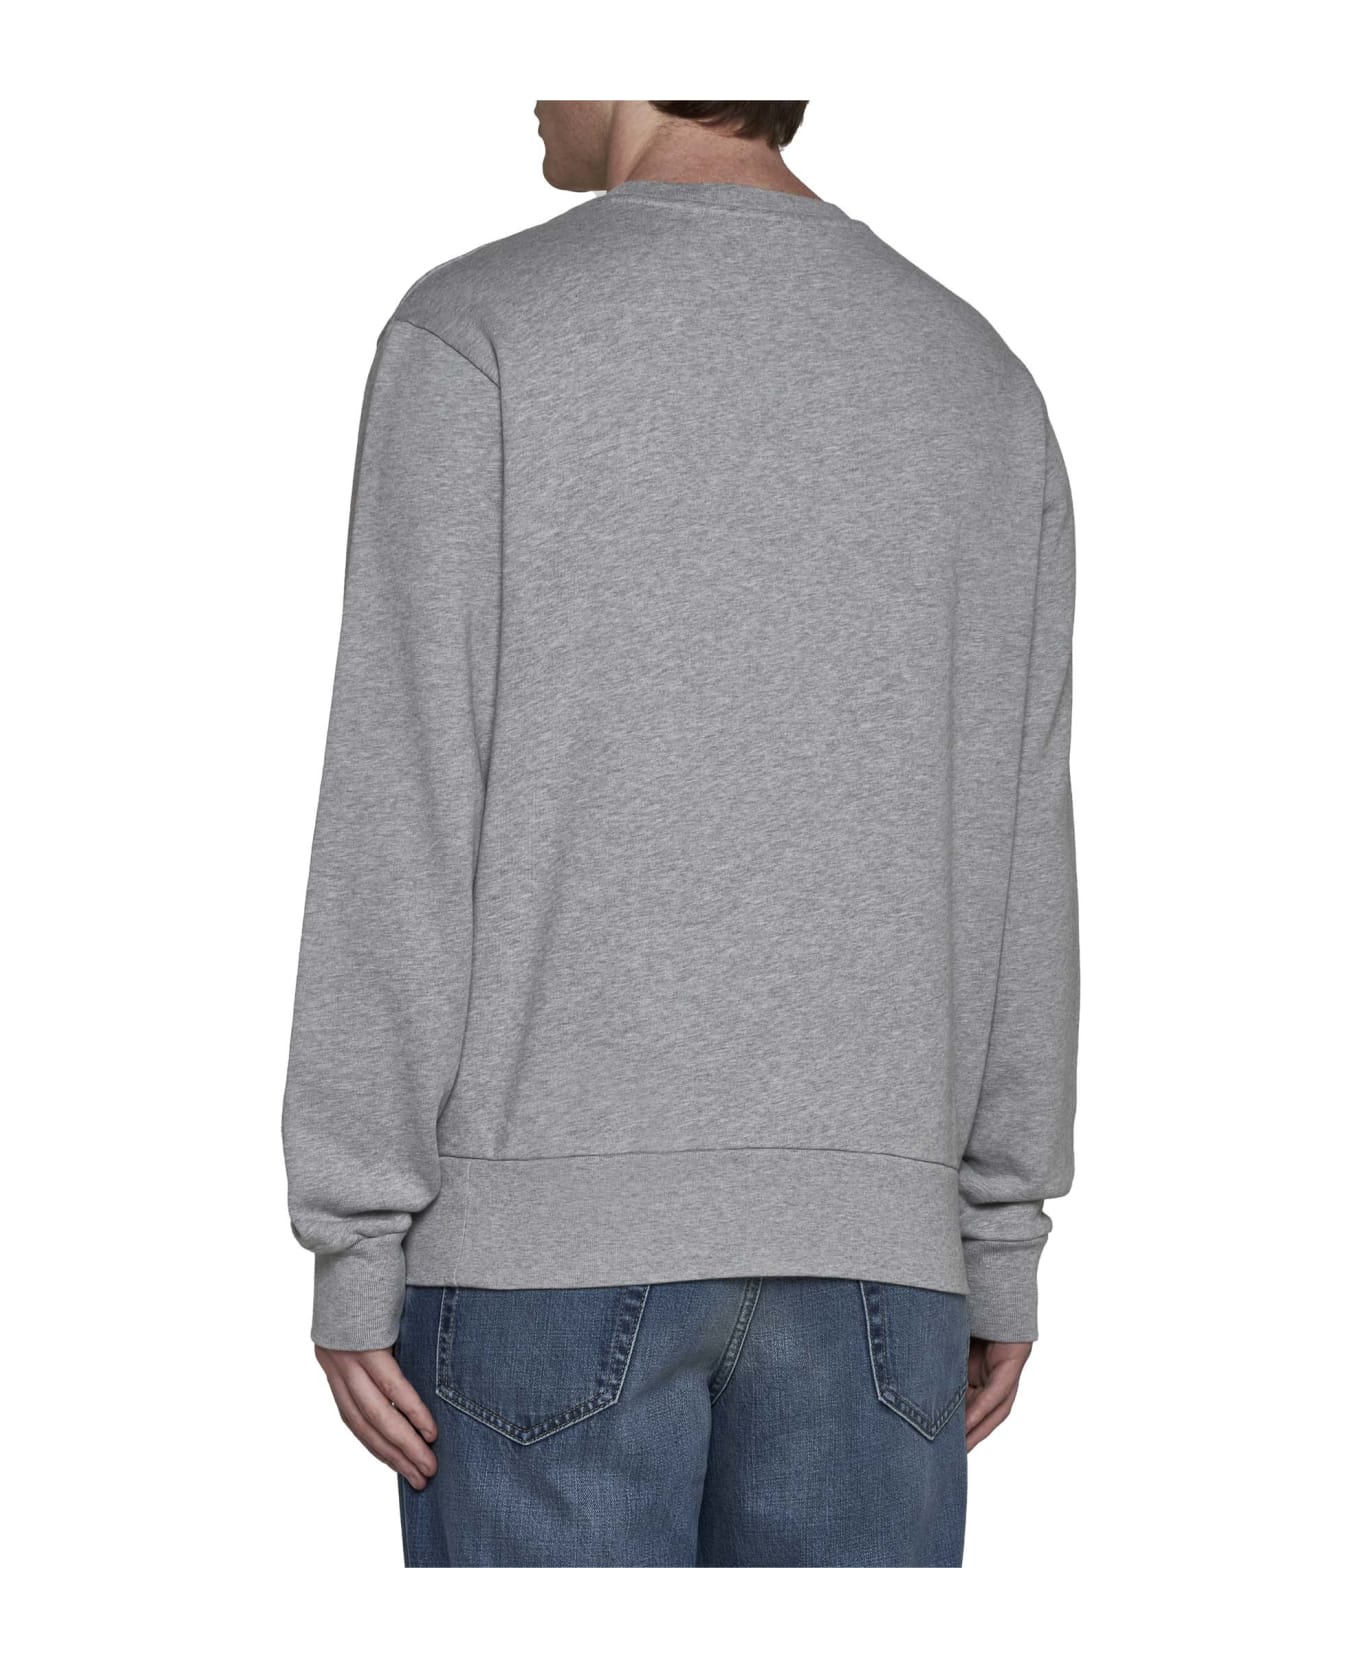 Polo Ralph Lauren Sweater - Spring heather